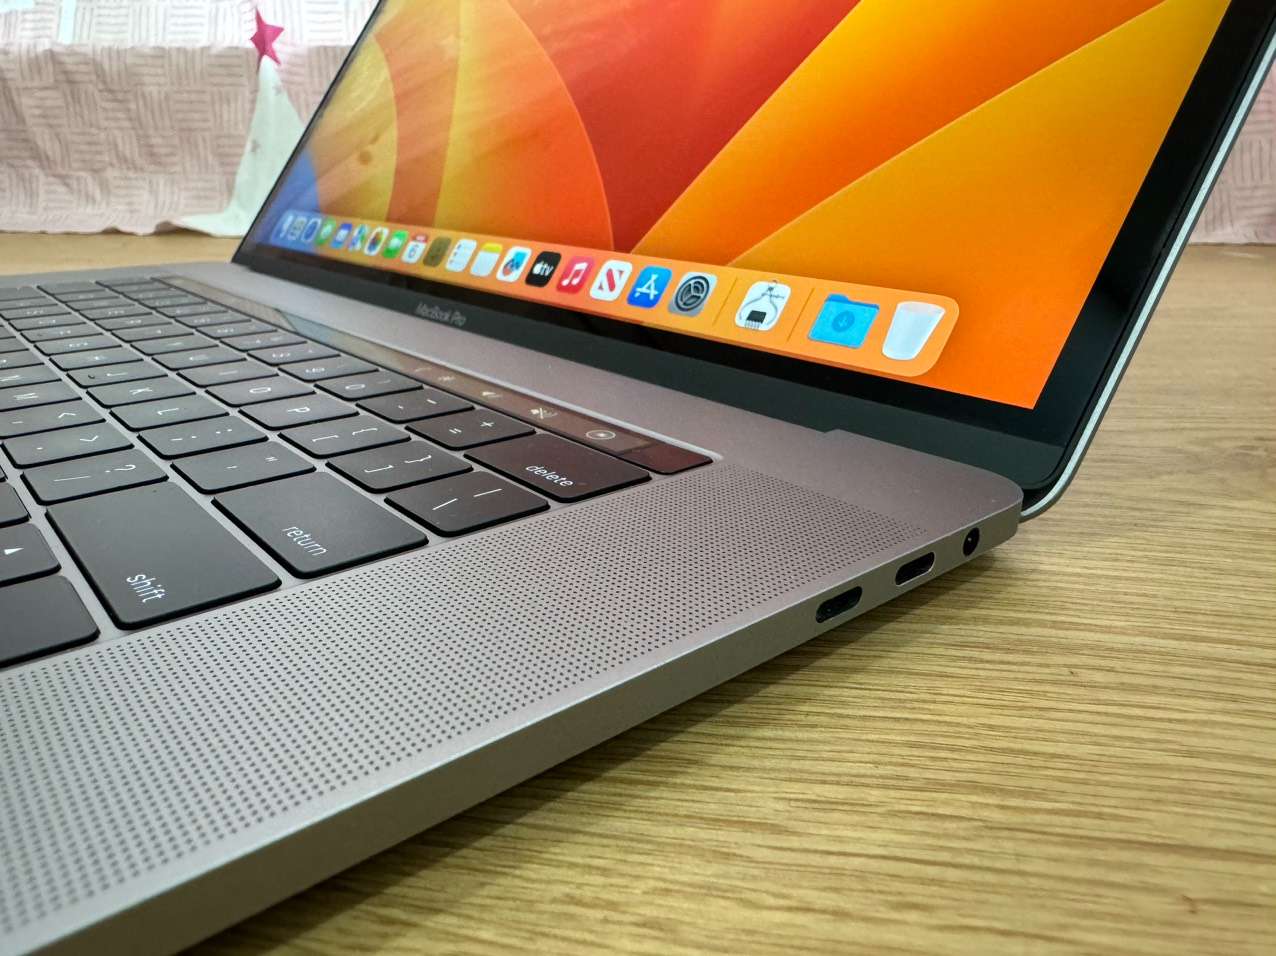 Macbook-pro-15-inch-2017-core-i7-ram-16gb-ssd-500gb-vga-like-new-7